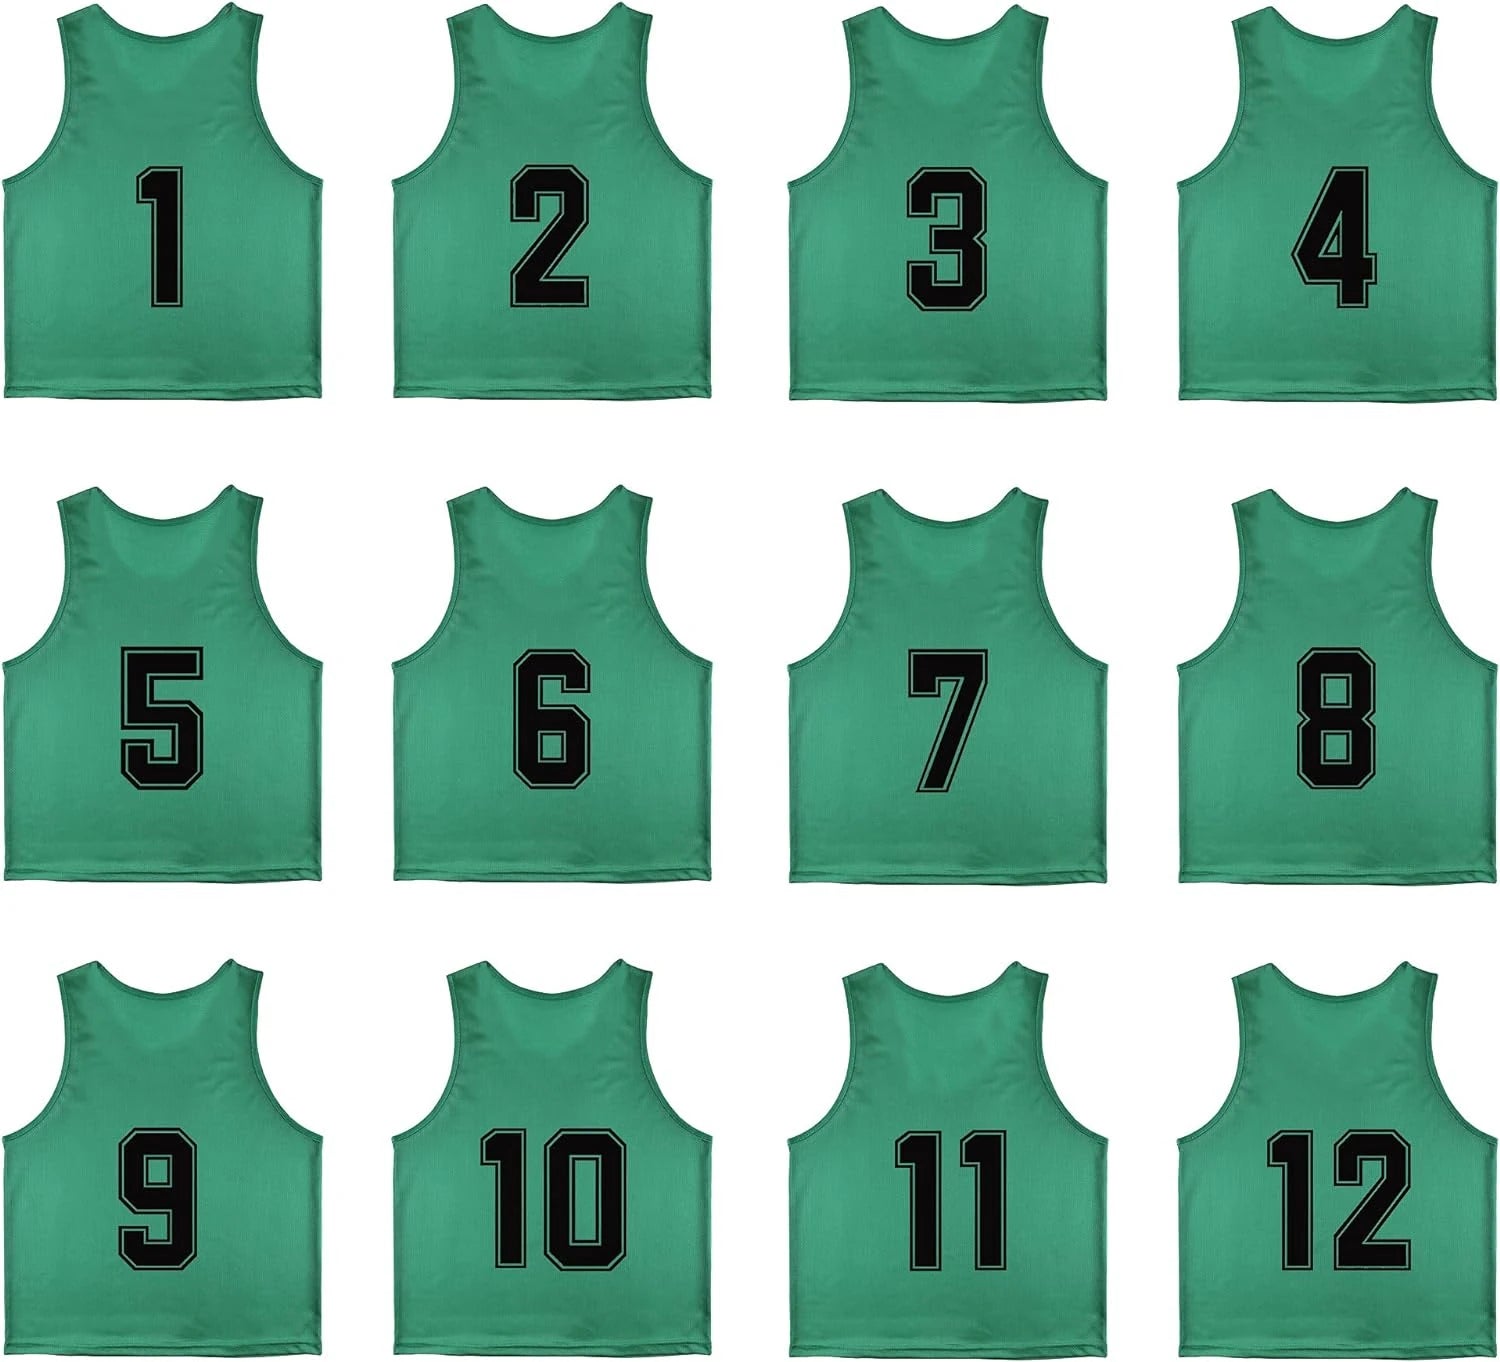 Buy green Team Practice Scrimmage Vests Sport Pinnies Training Bibs Numbered (1-12)